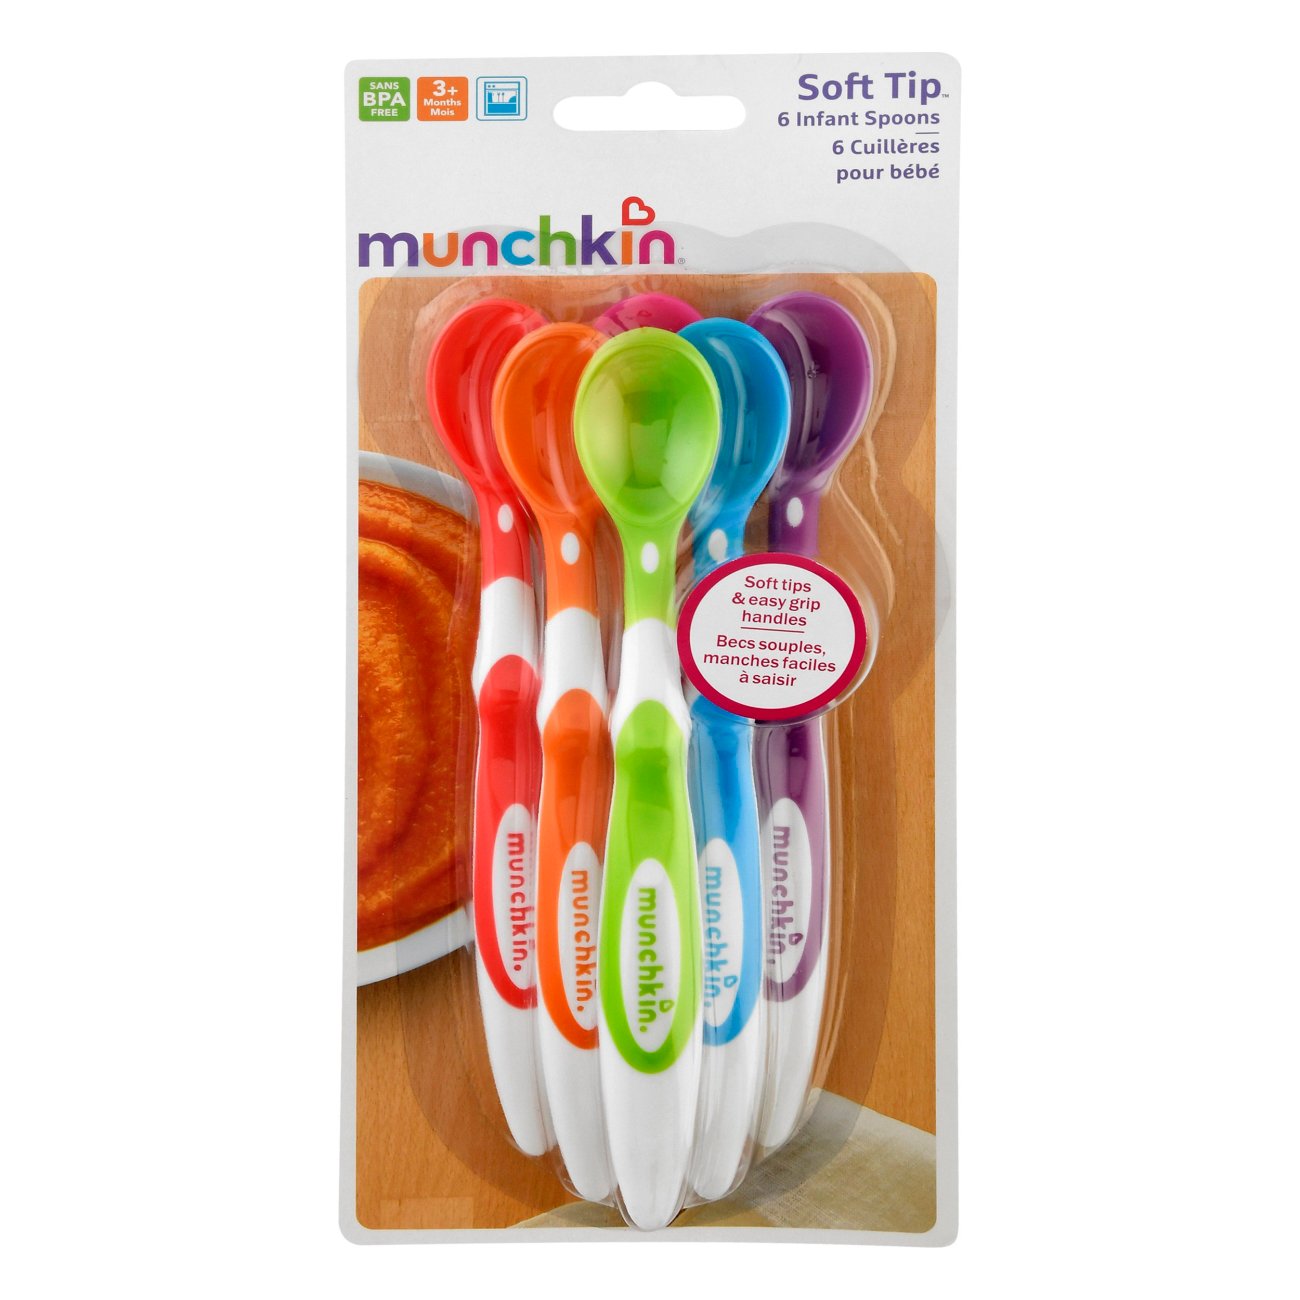 Munchkin Soft Tip Infant Spoons 6 Pack 